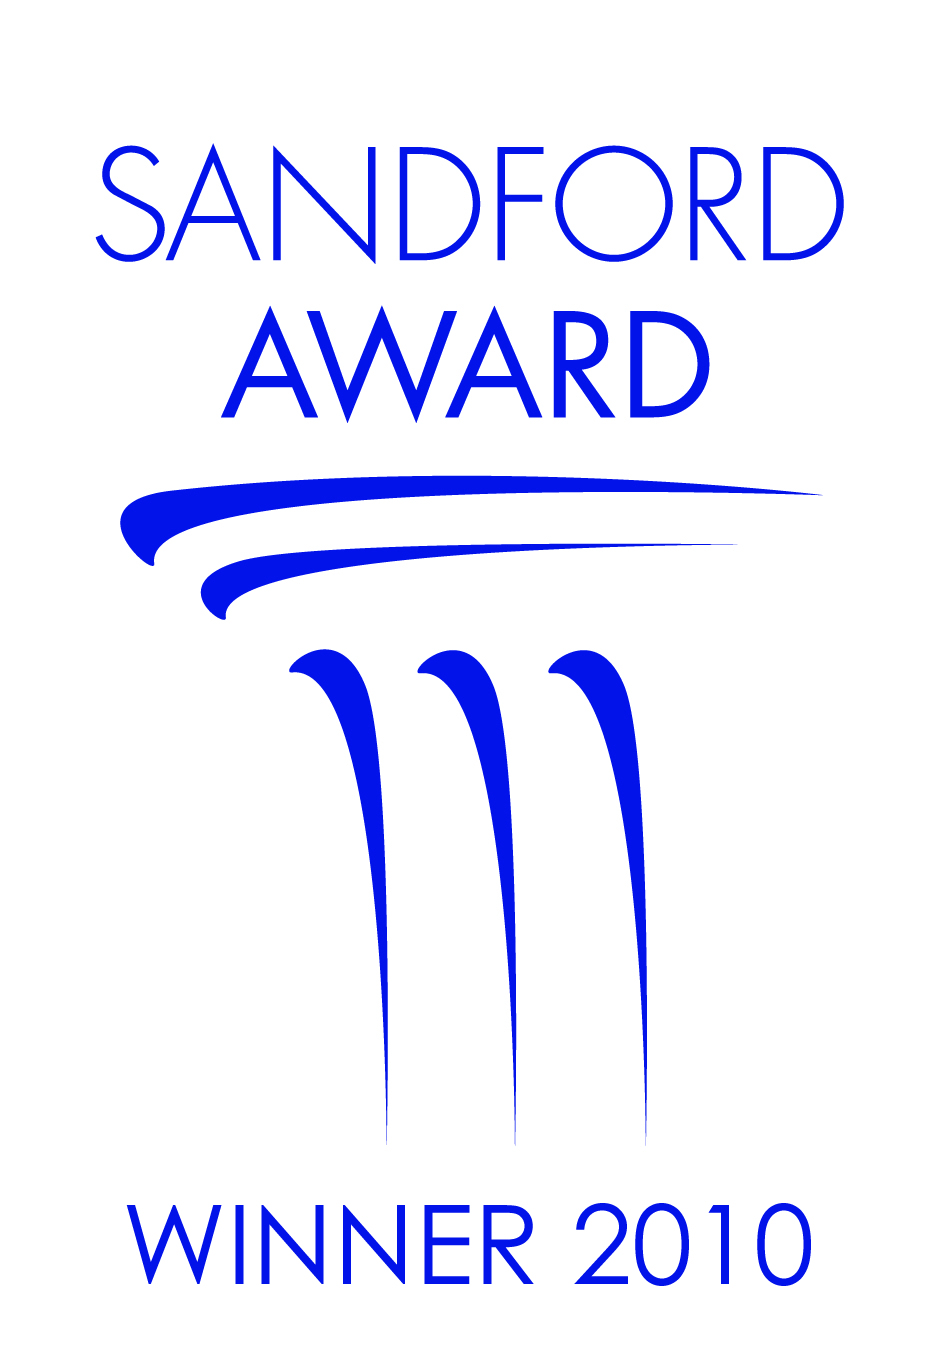 Sandford Award